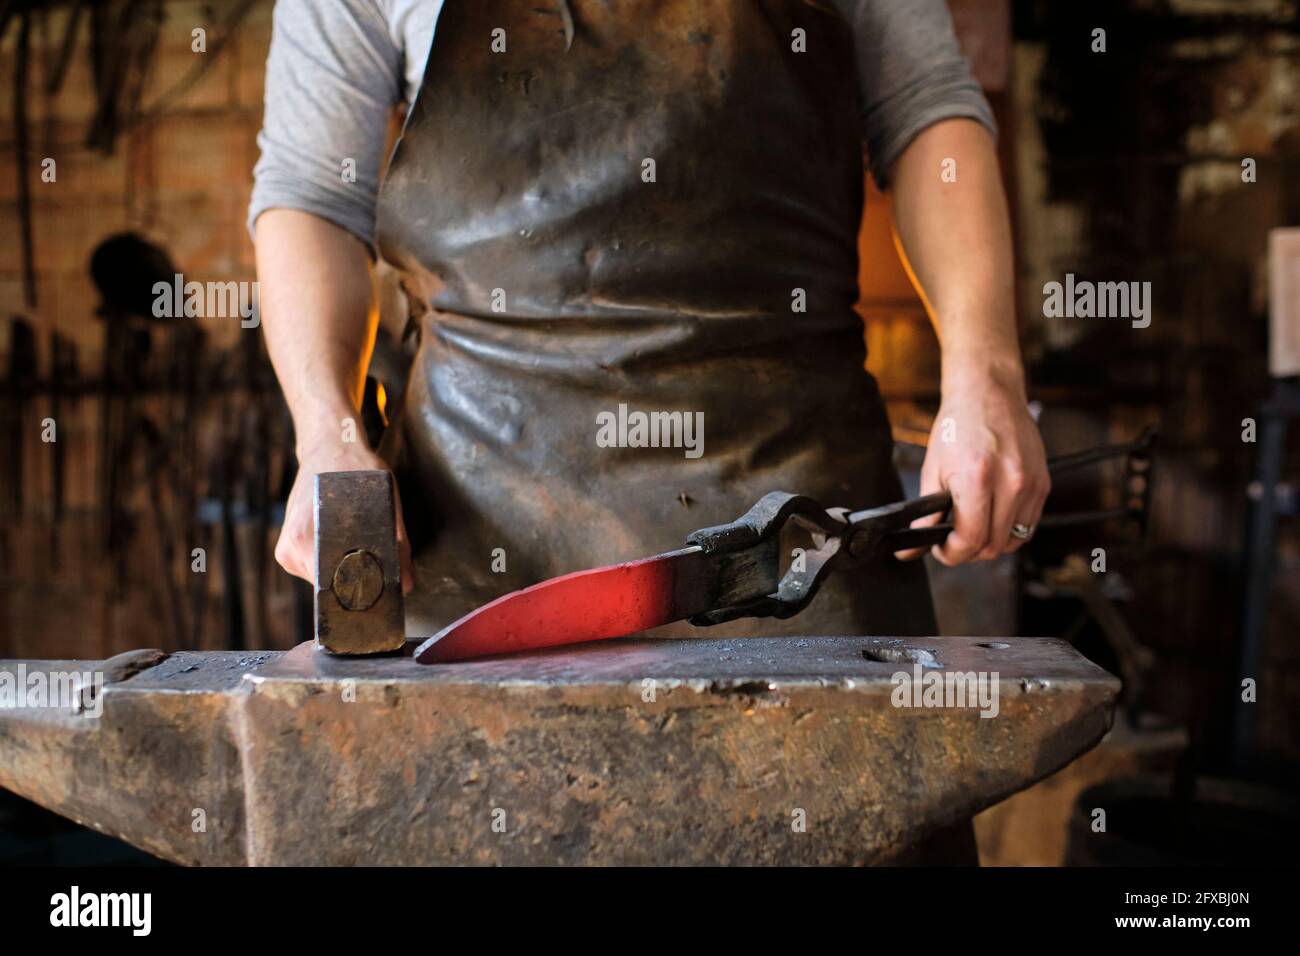 Blacksmith making knife of metal on anvil at blacksmith shop Stock Photo